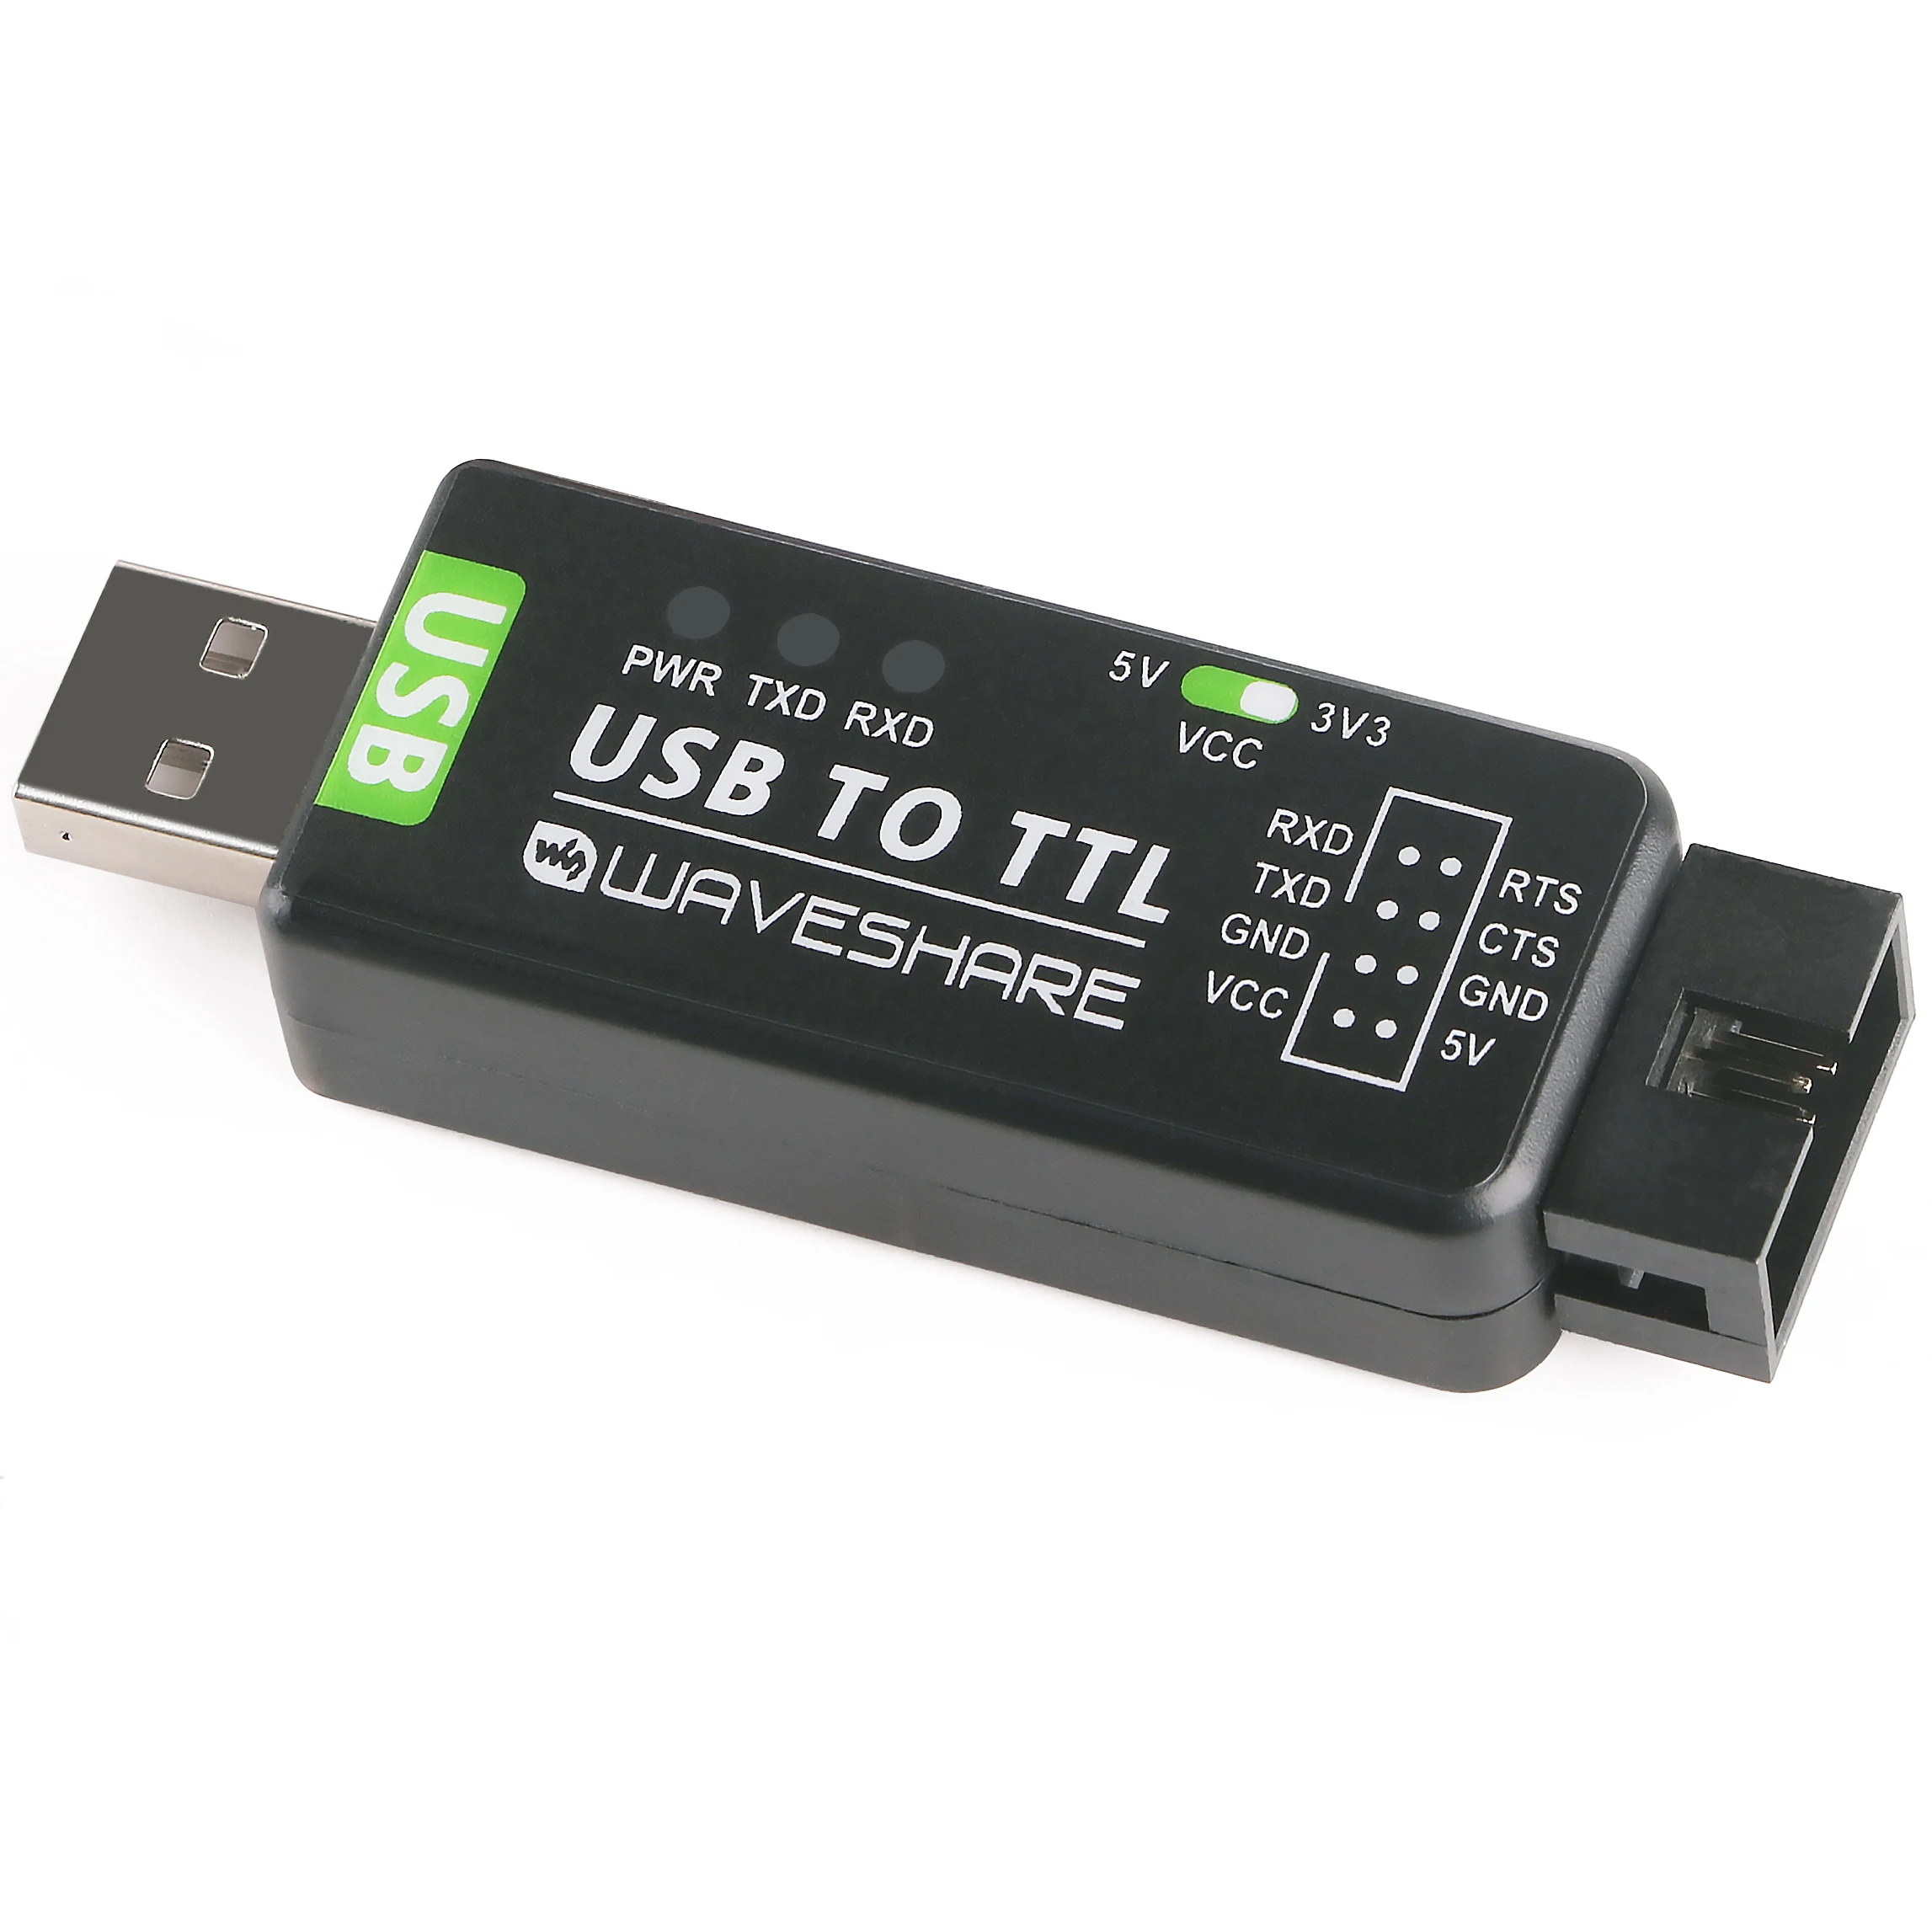 

USB to TTL Serial Converter Dupont 3.3V 5V FTDI Board Mudel Cable 6 Pins 6P 2.54mm Dupont Header Uart Aadpter